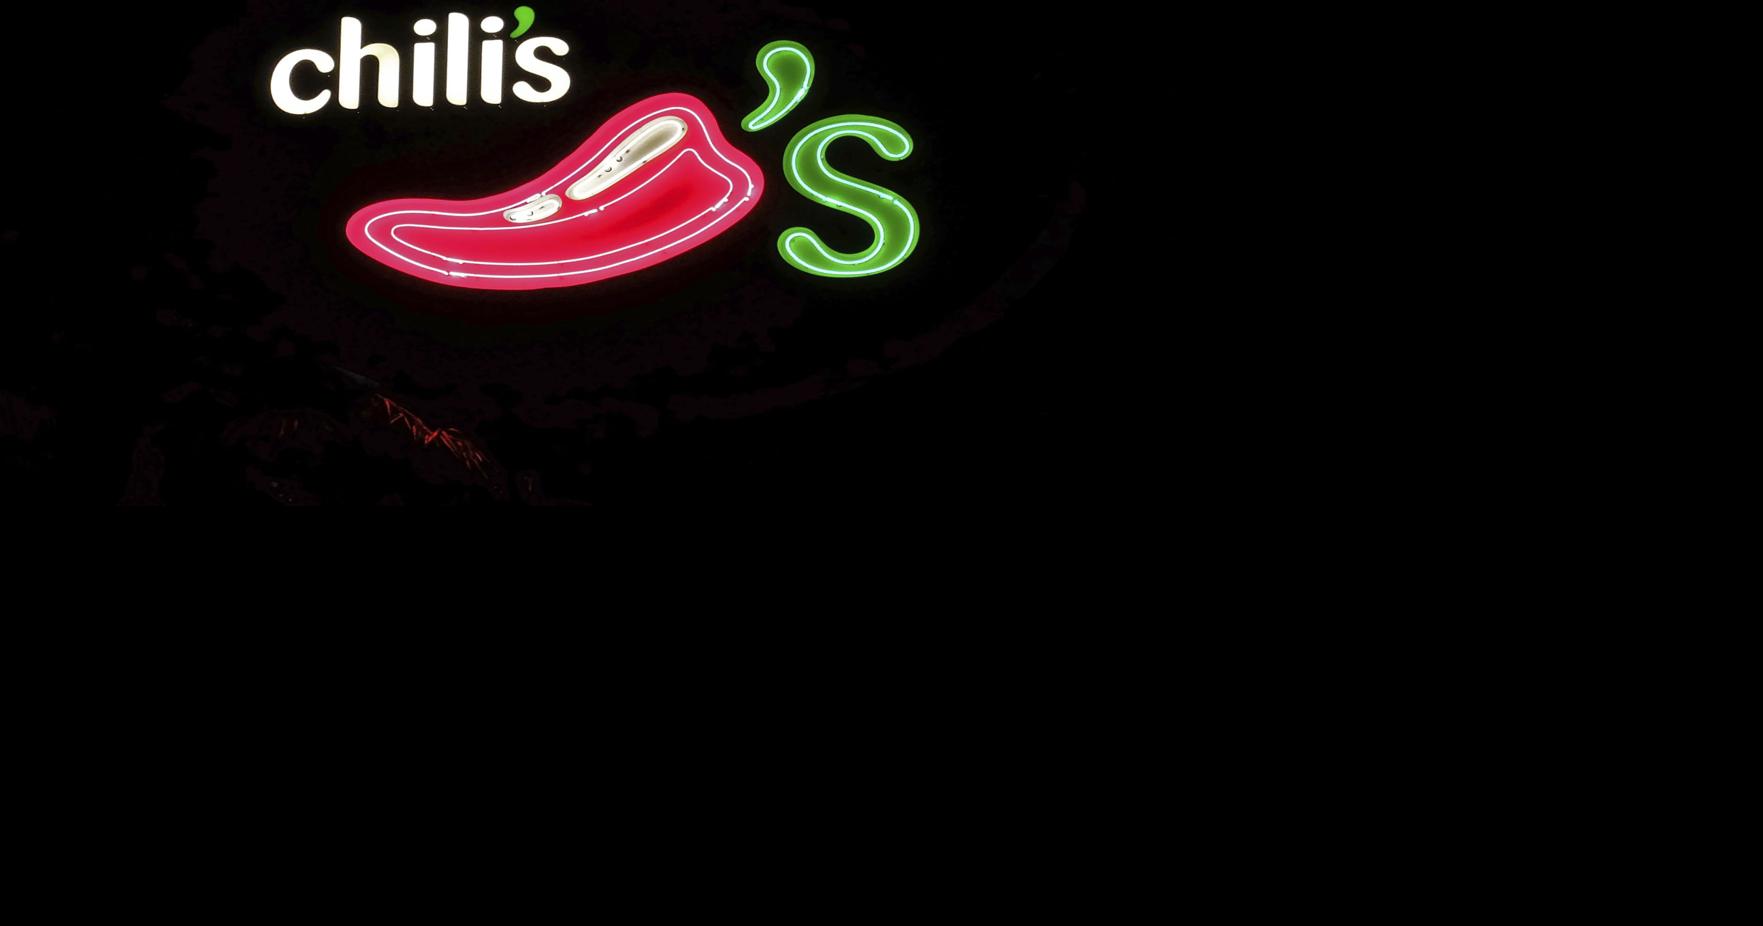 Chili’s Restaurant in Baton Rouge Shutting Down – Business News